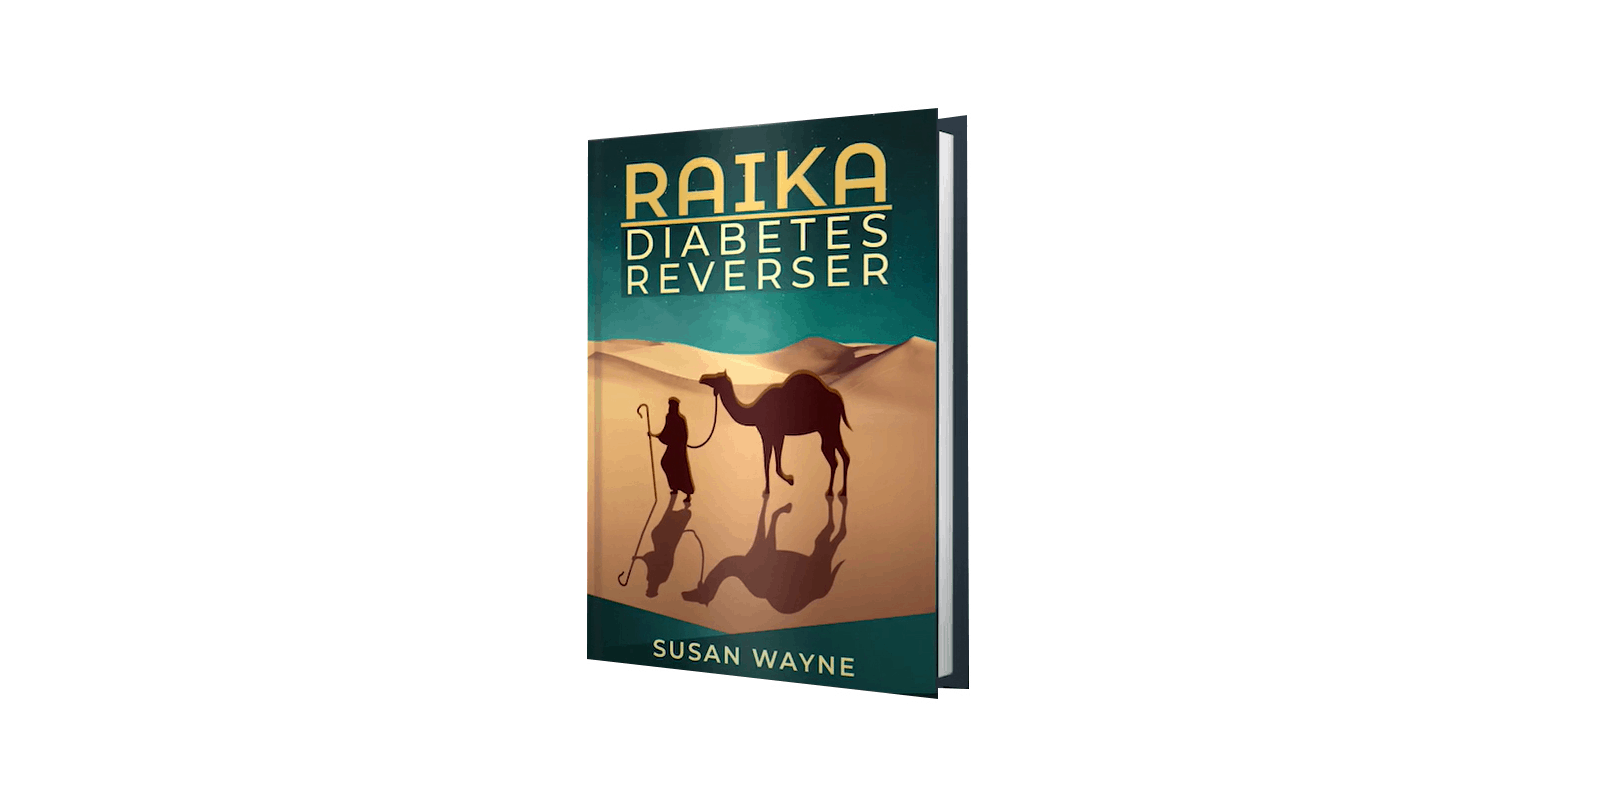 Raika Diabetes Reverser Review